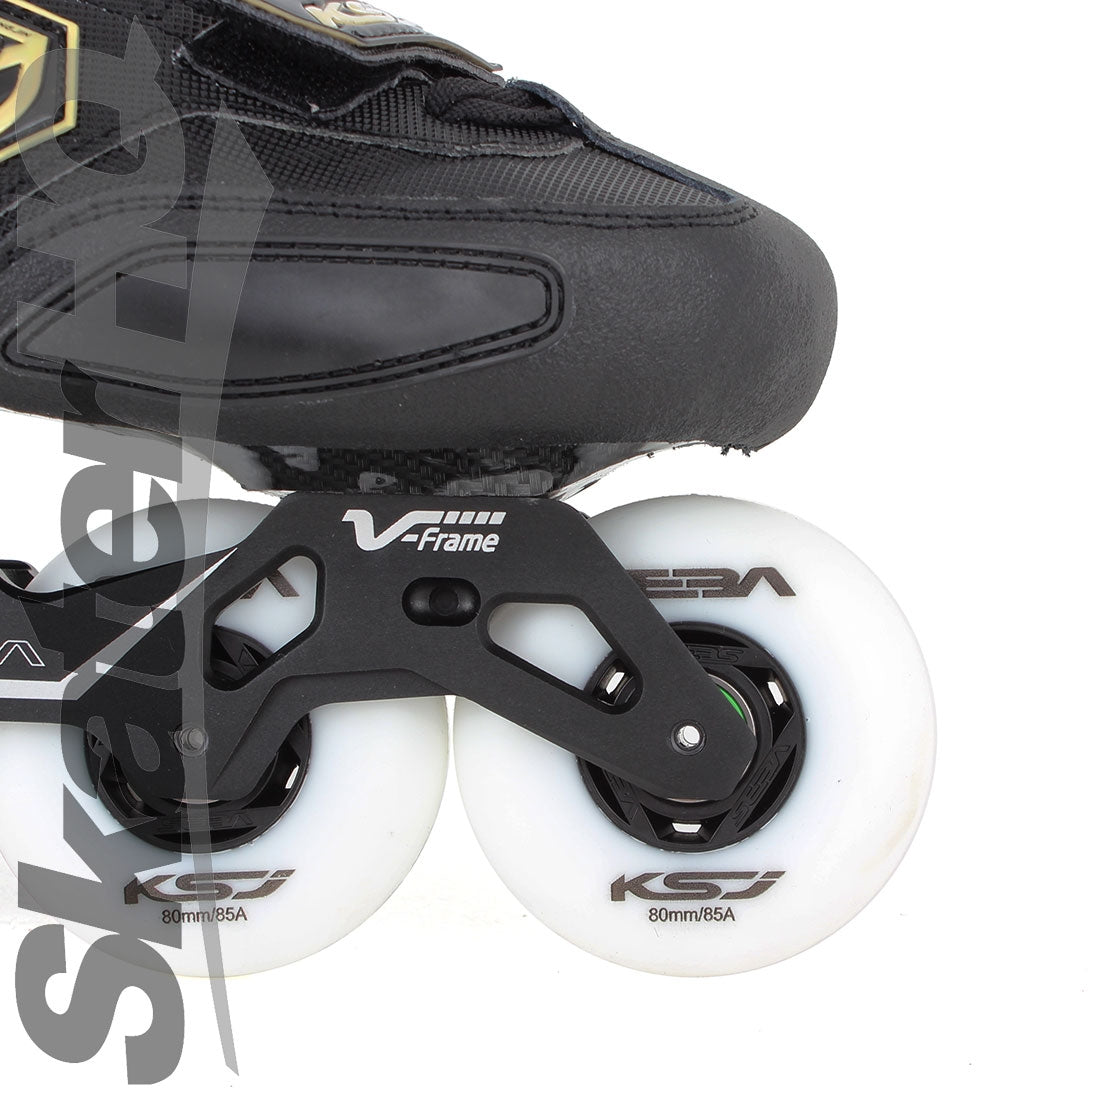 SEBA KSJ 2 Black 10US / EU43 Inline Rec Skates